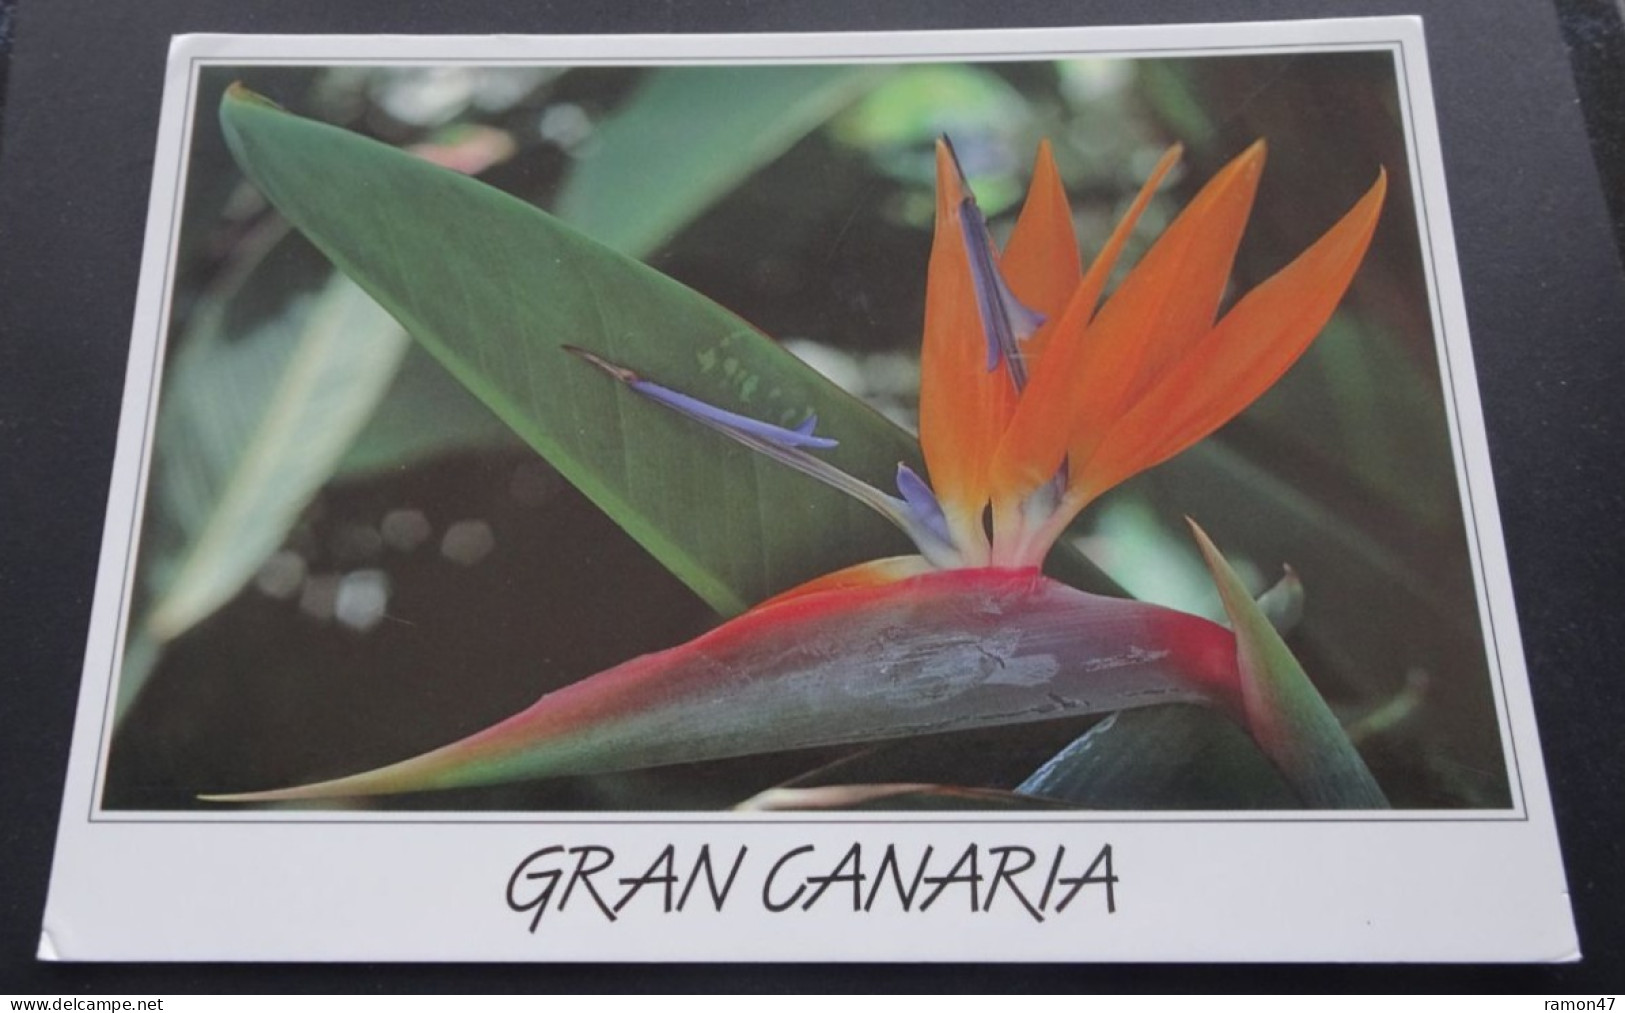 Gran Canaria - Strelitzia - Estilo Canarias - Foto Lorca - Gran Canaria